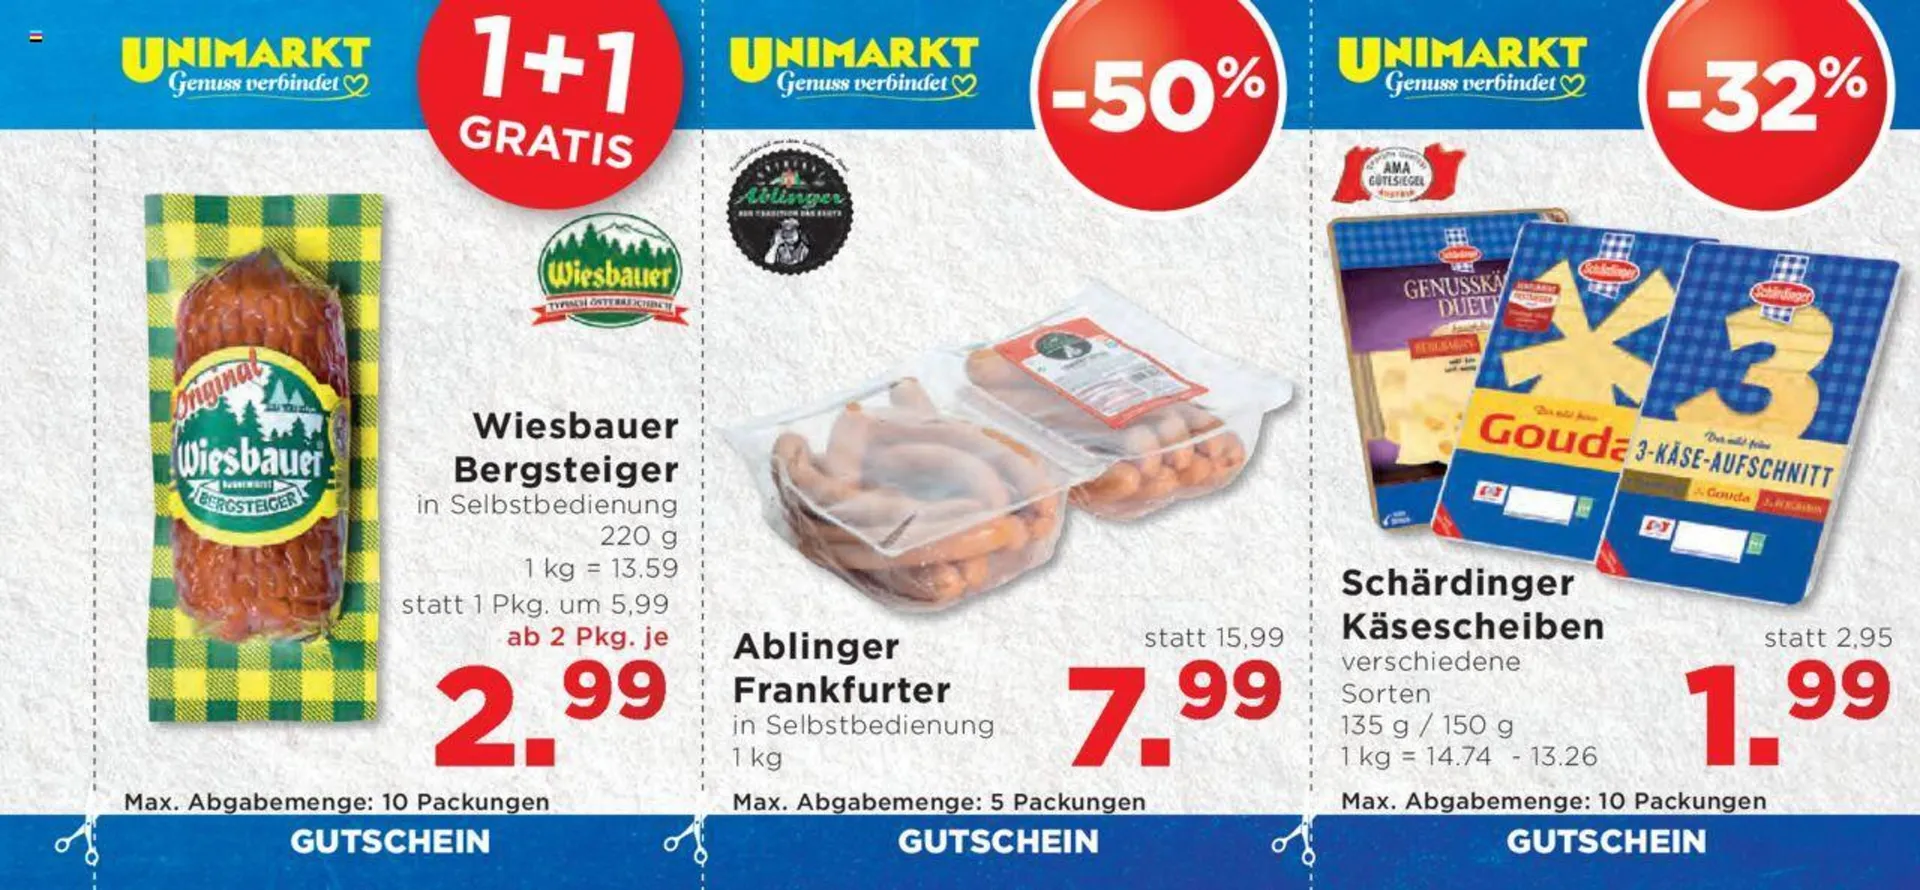 Unimarkt Flugblatt - 3